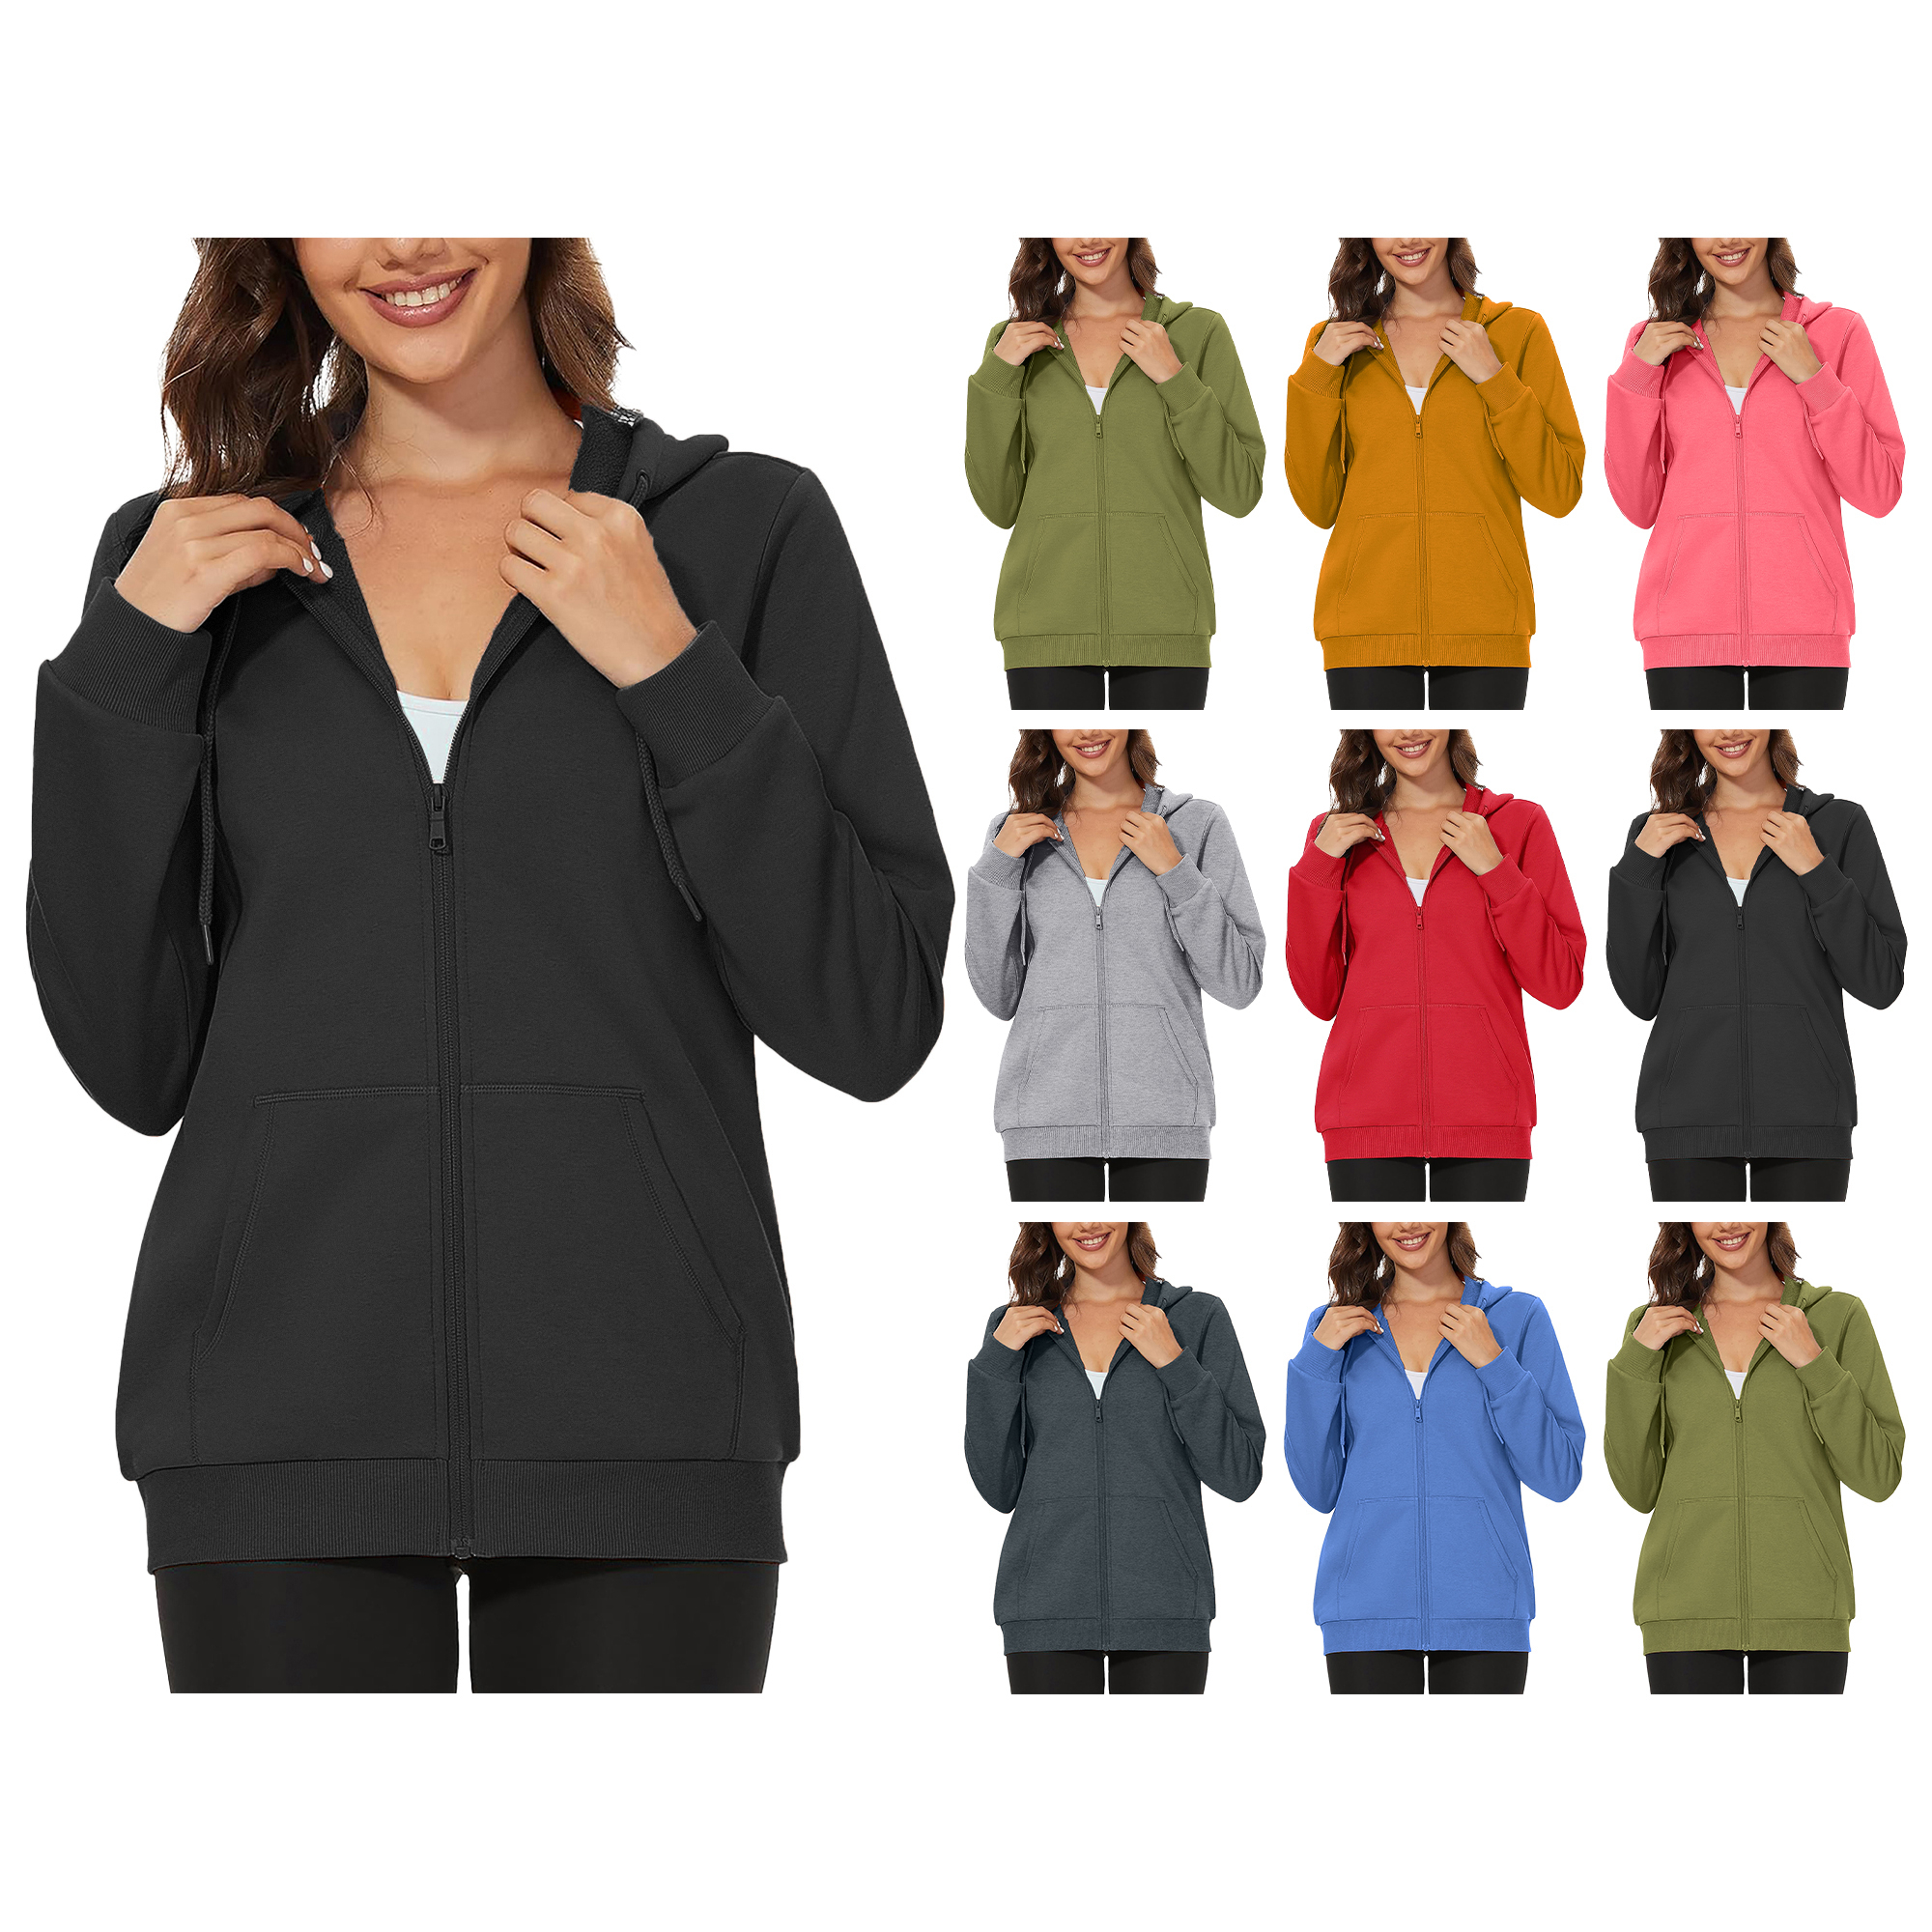 Women's Winter Warm Soft Blend Fleece Lined Full Zip Up Hoodie - Charcoal, Medium